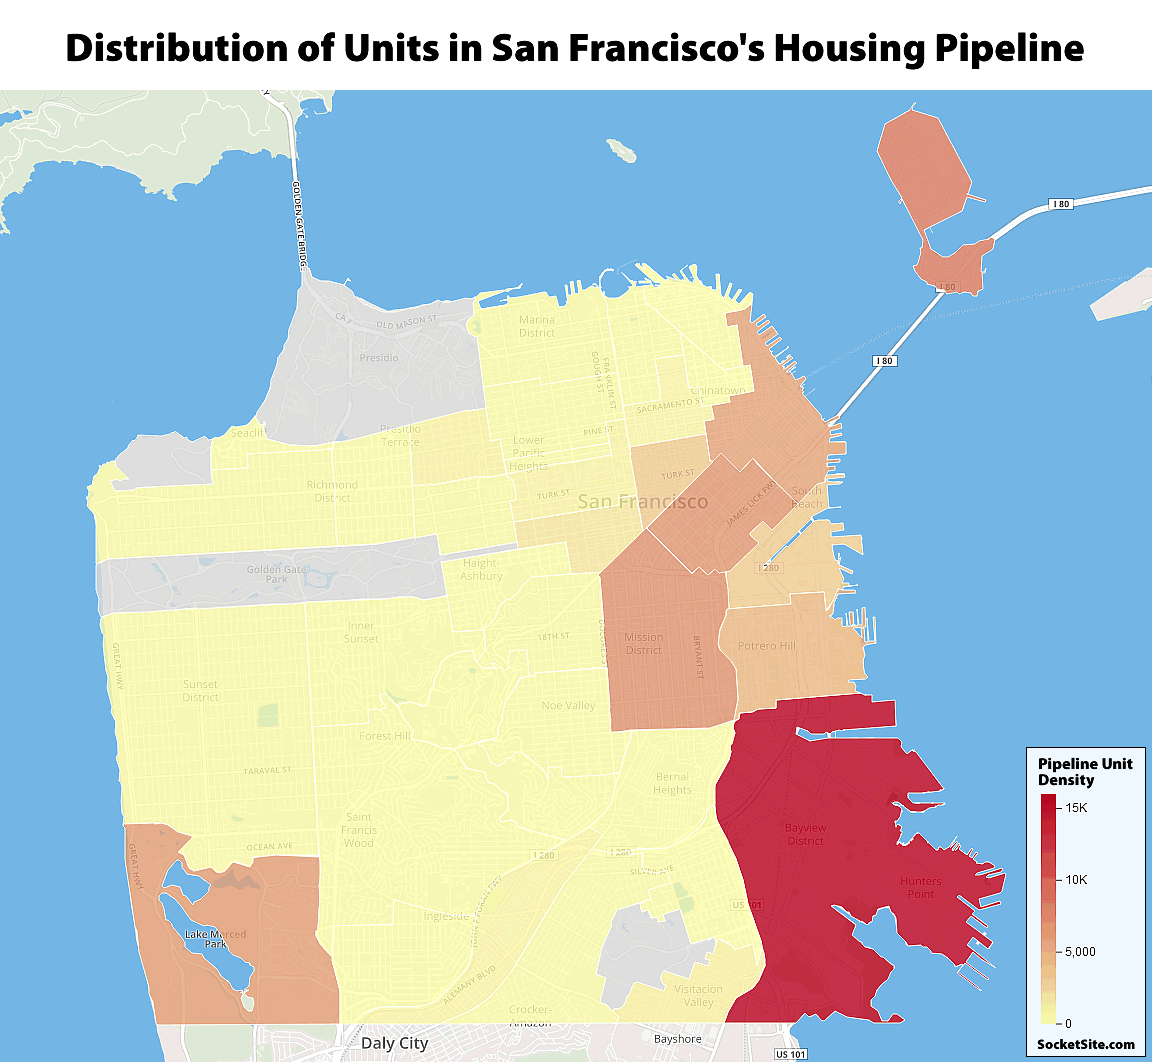 Pipeline of Residential Development in San Francisco Drops